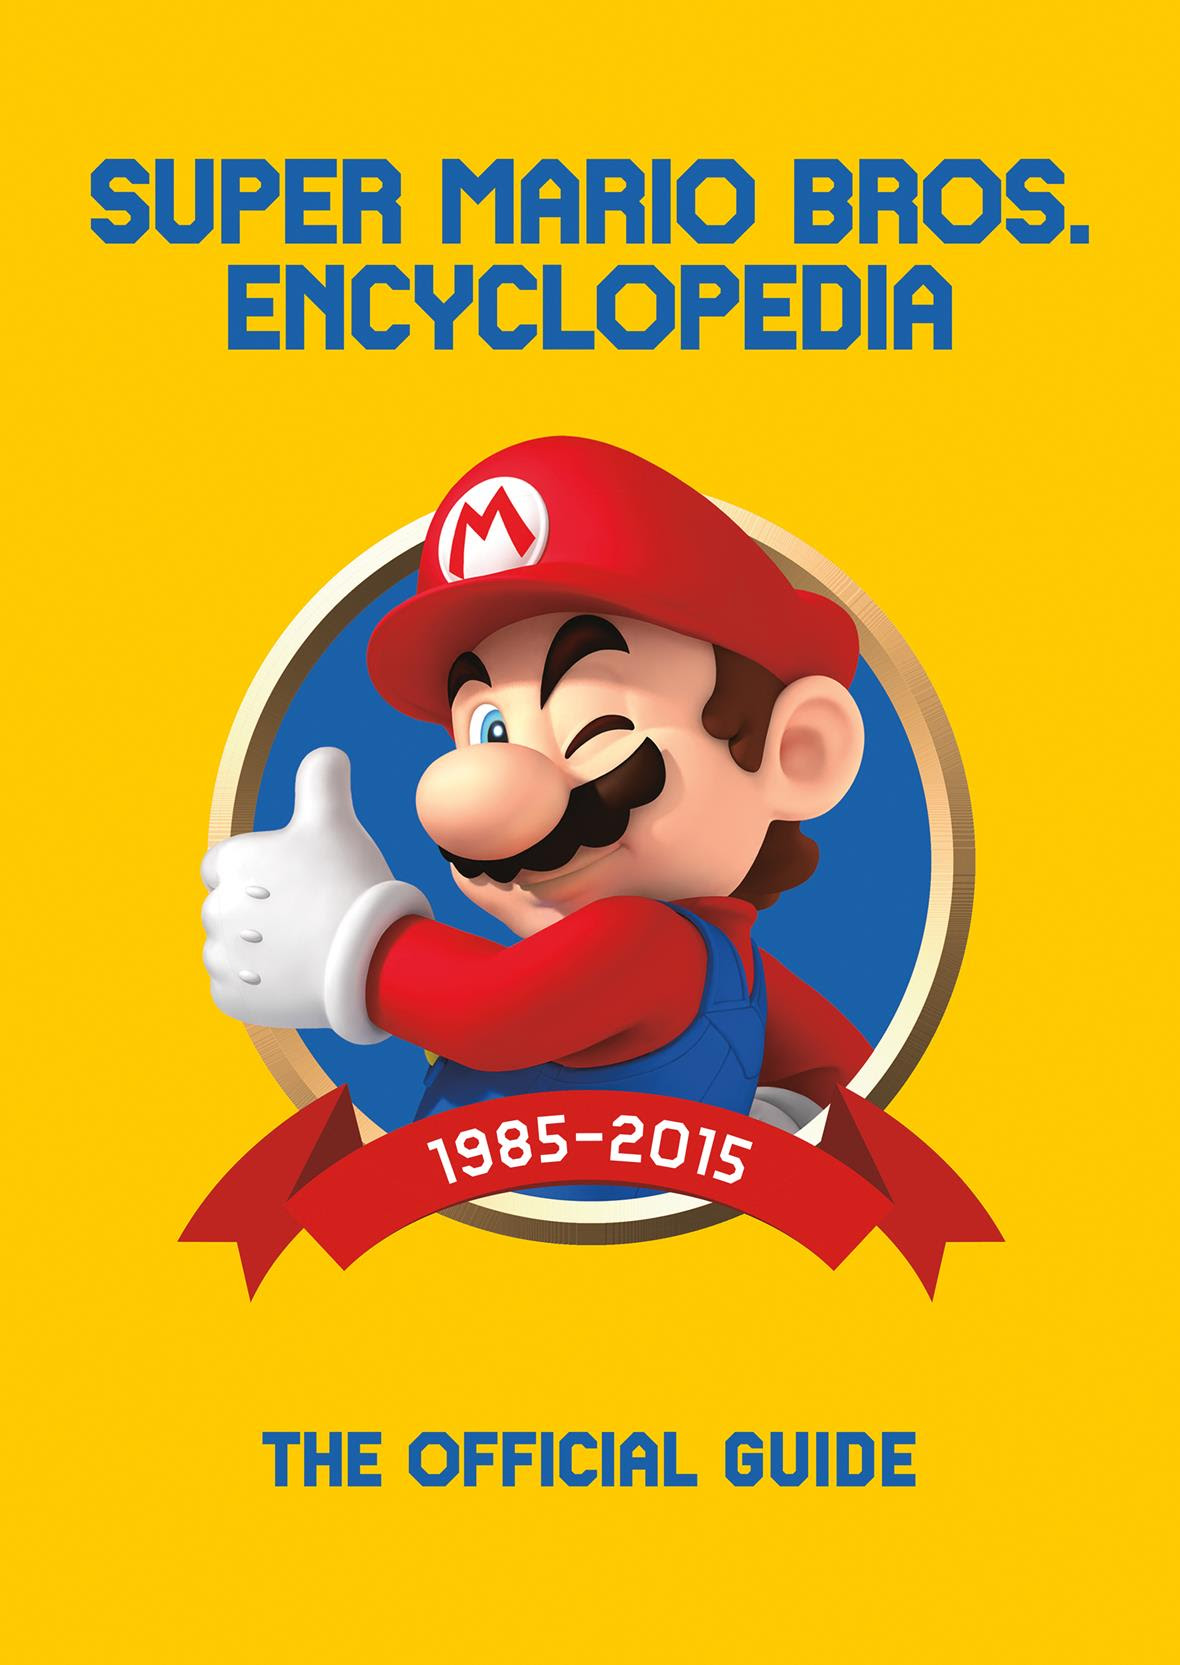 Nintendo and Dark Horse to produce 'Super Mario Encyclopedia!' this October 2018